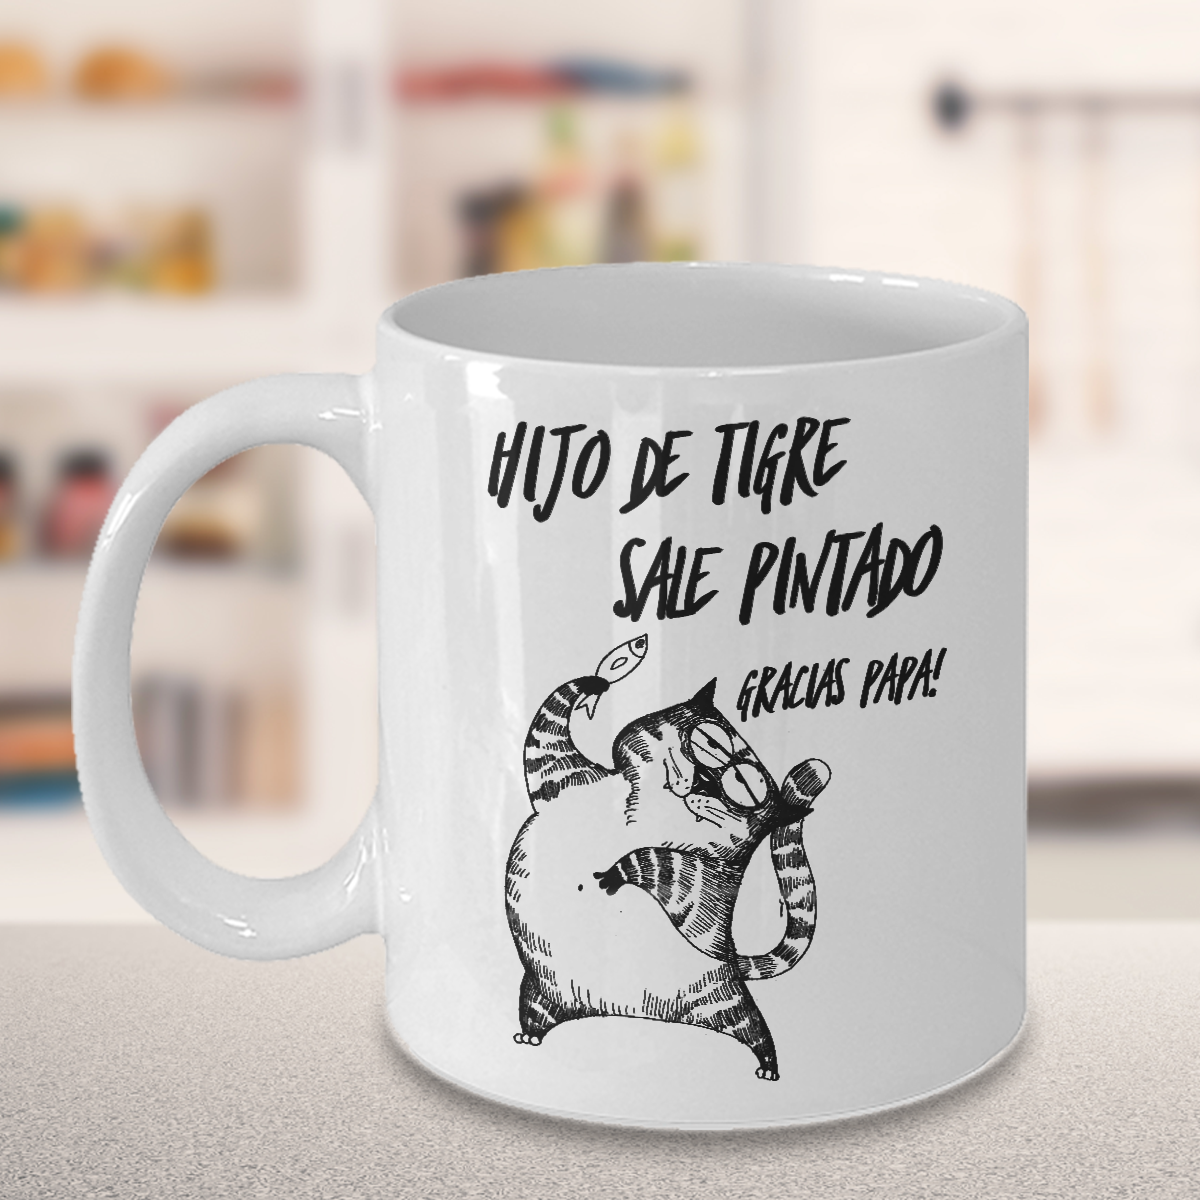 Taza de cafe gatos chistosas ; mugs in spanish ; regalo para padre